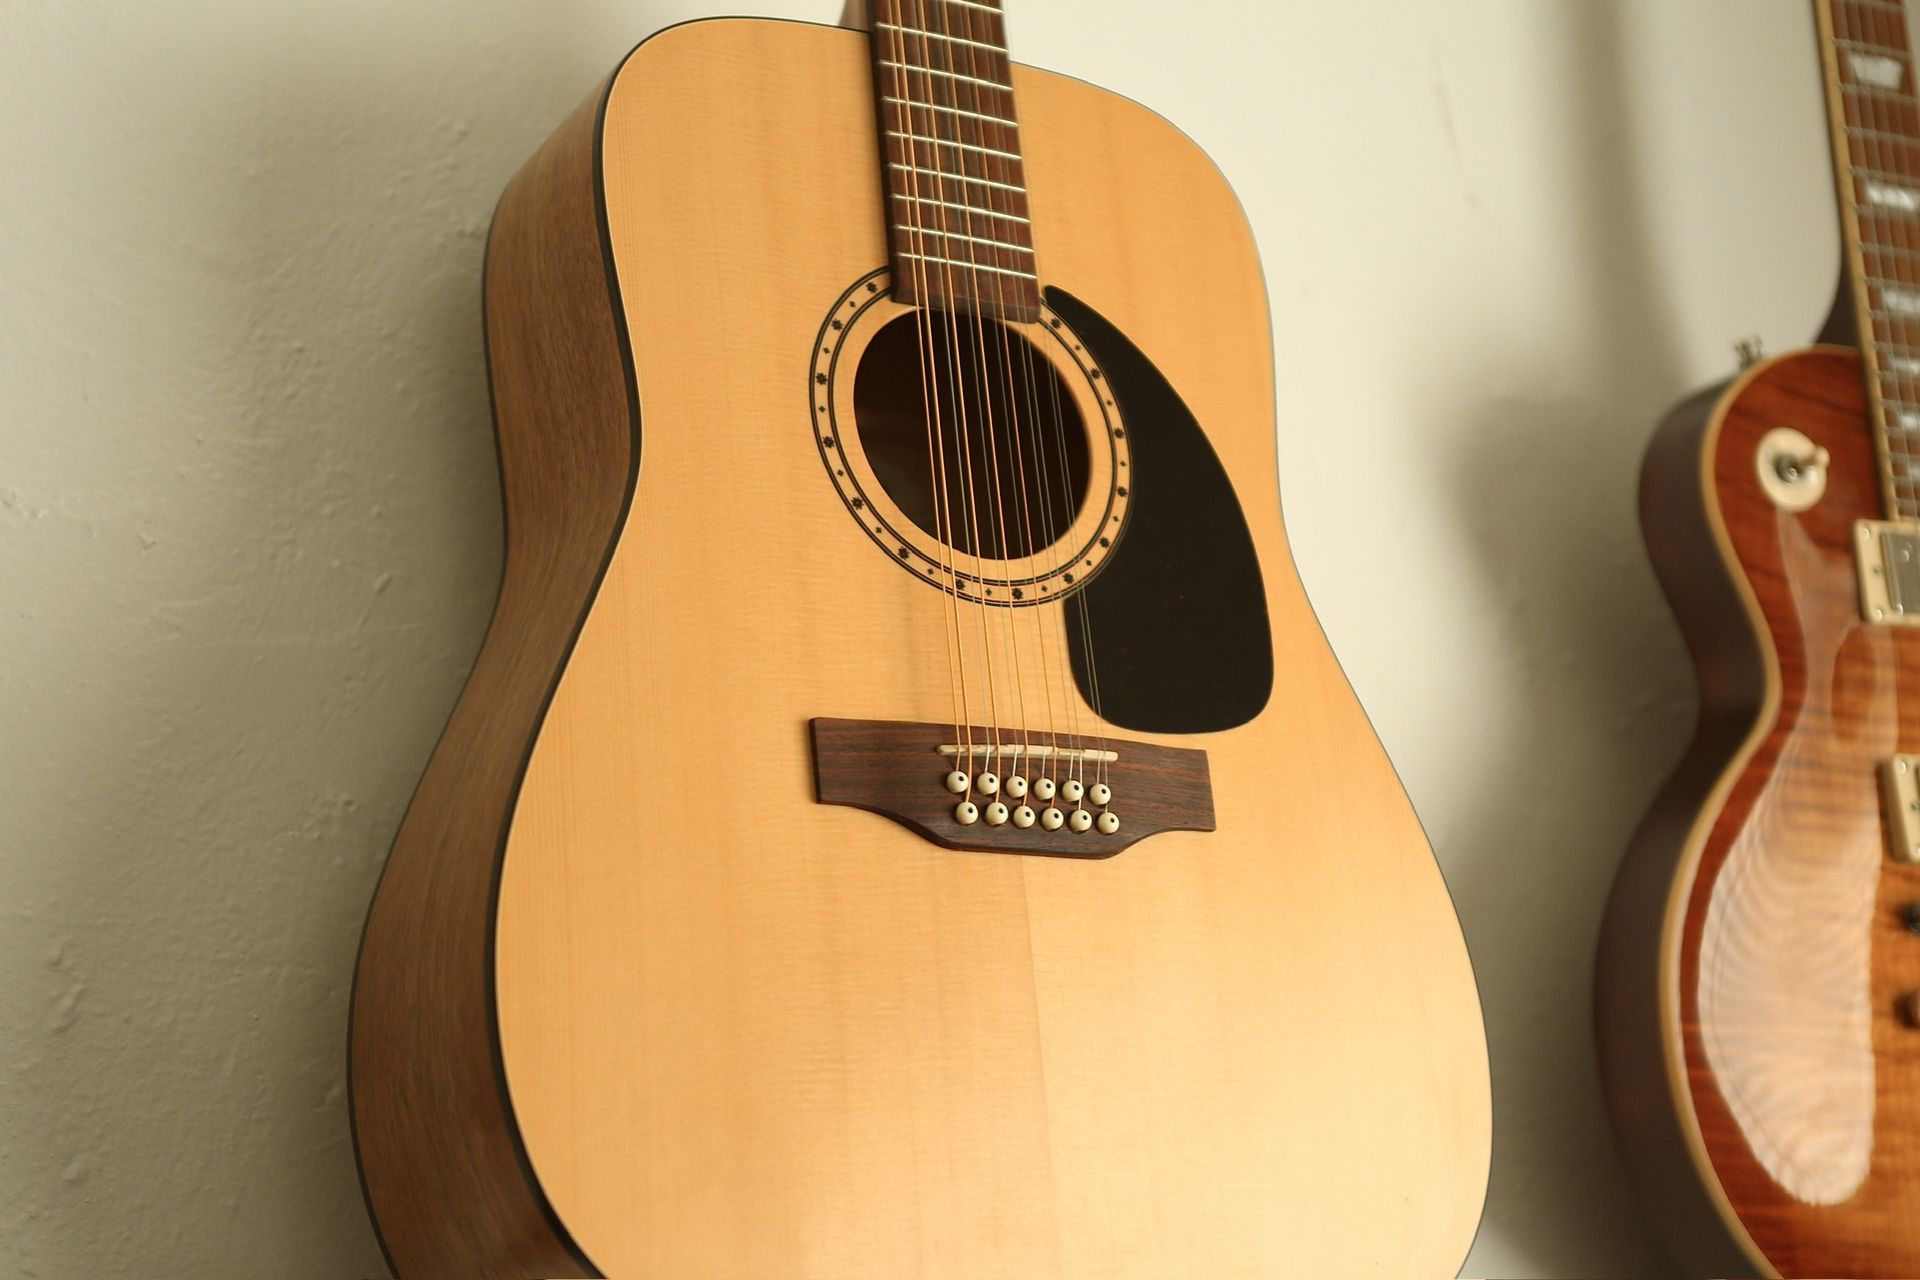 Simon and Patrick 12 String Acoustic Guitar $350 OBO